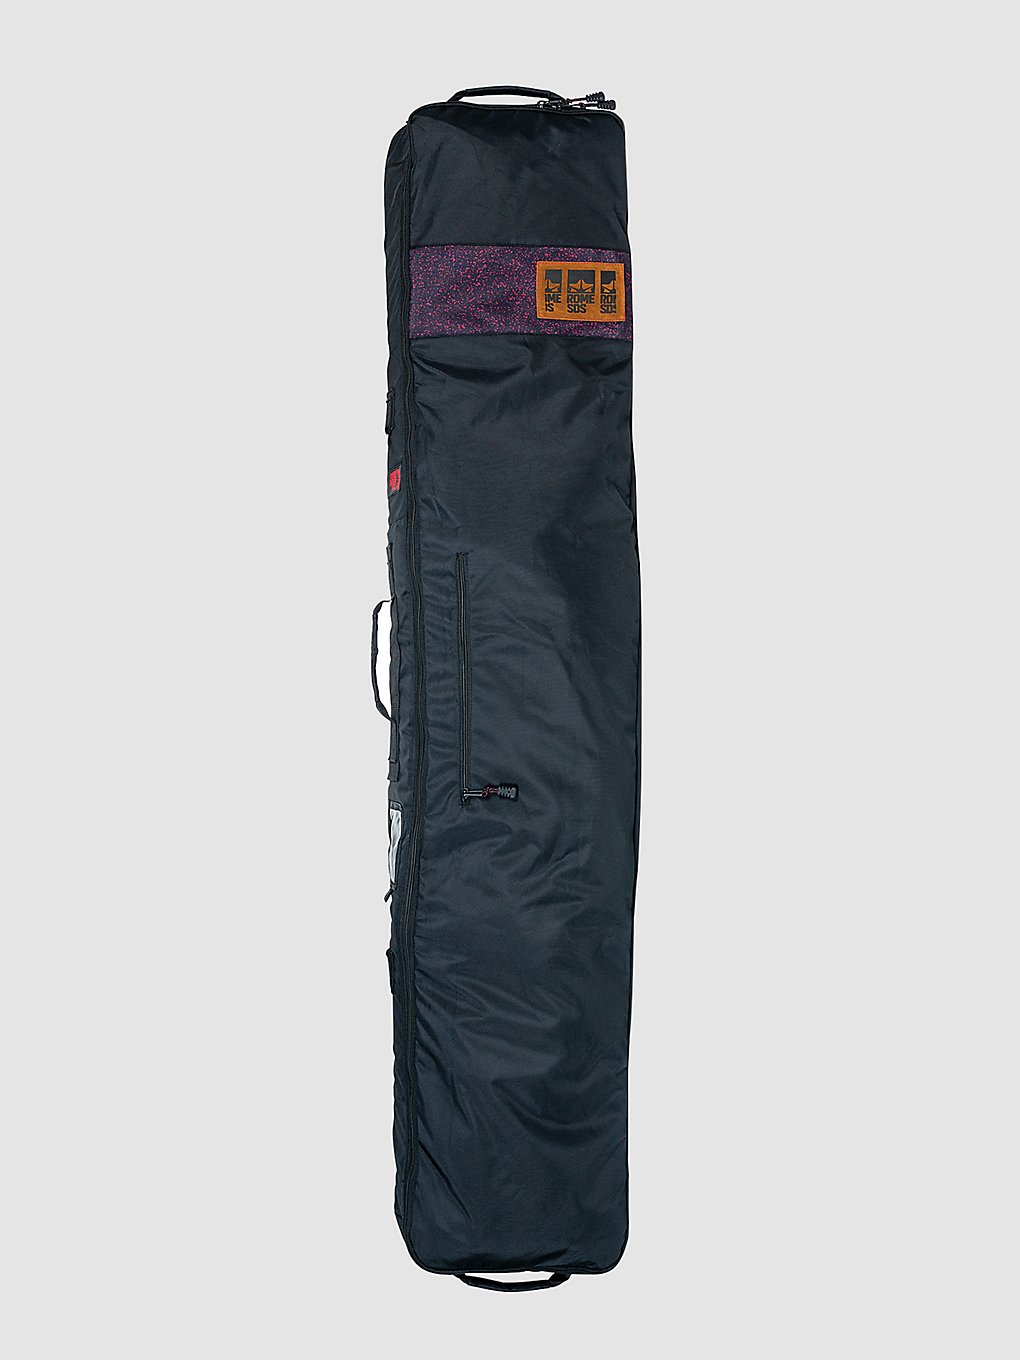 Rome Nomad Snowboard Bag uni kaufen